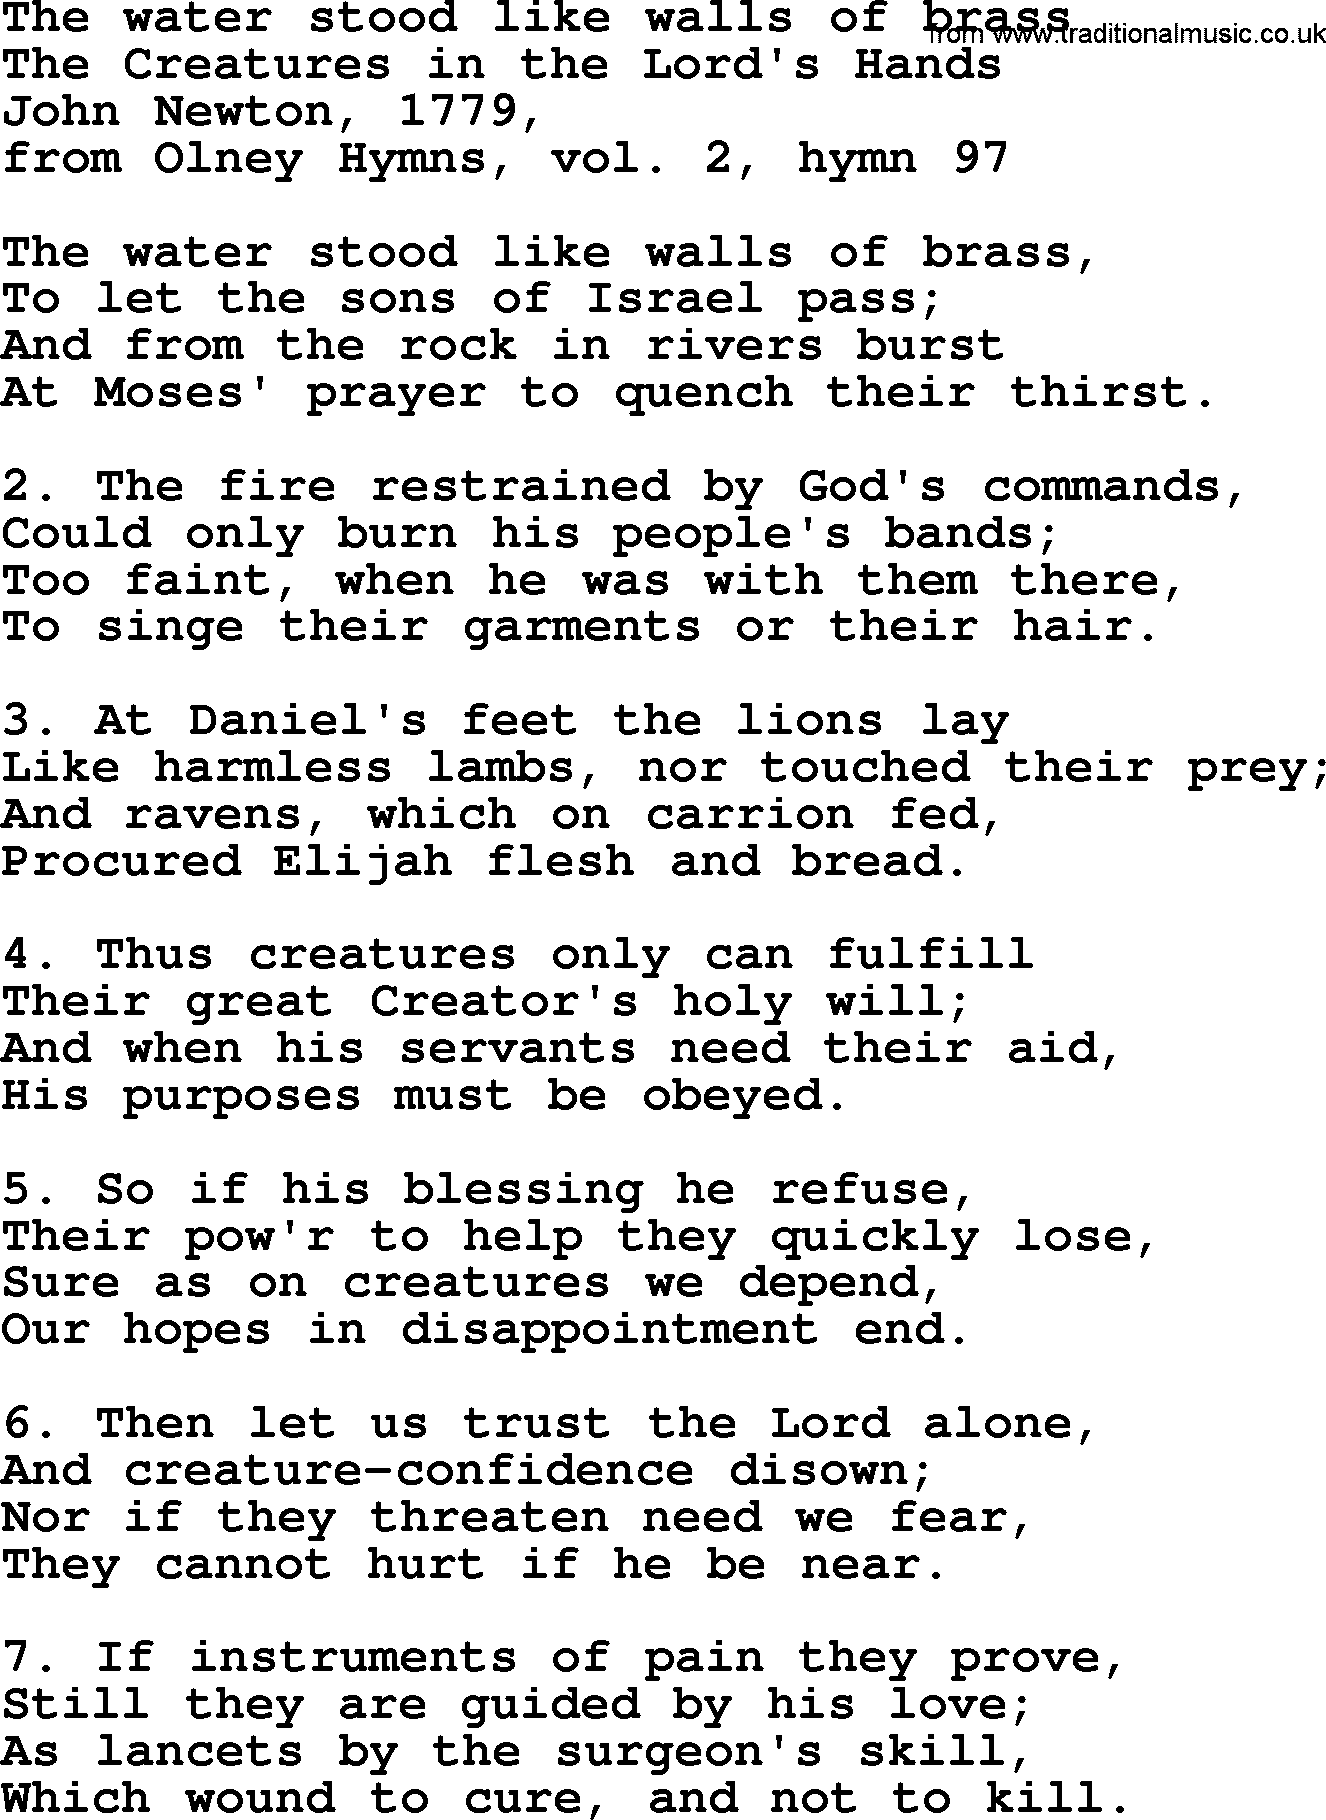 John Newton hymn: The Water Stood Like Walls Of Brass, lyrics